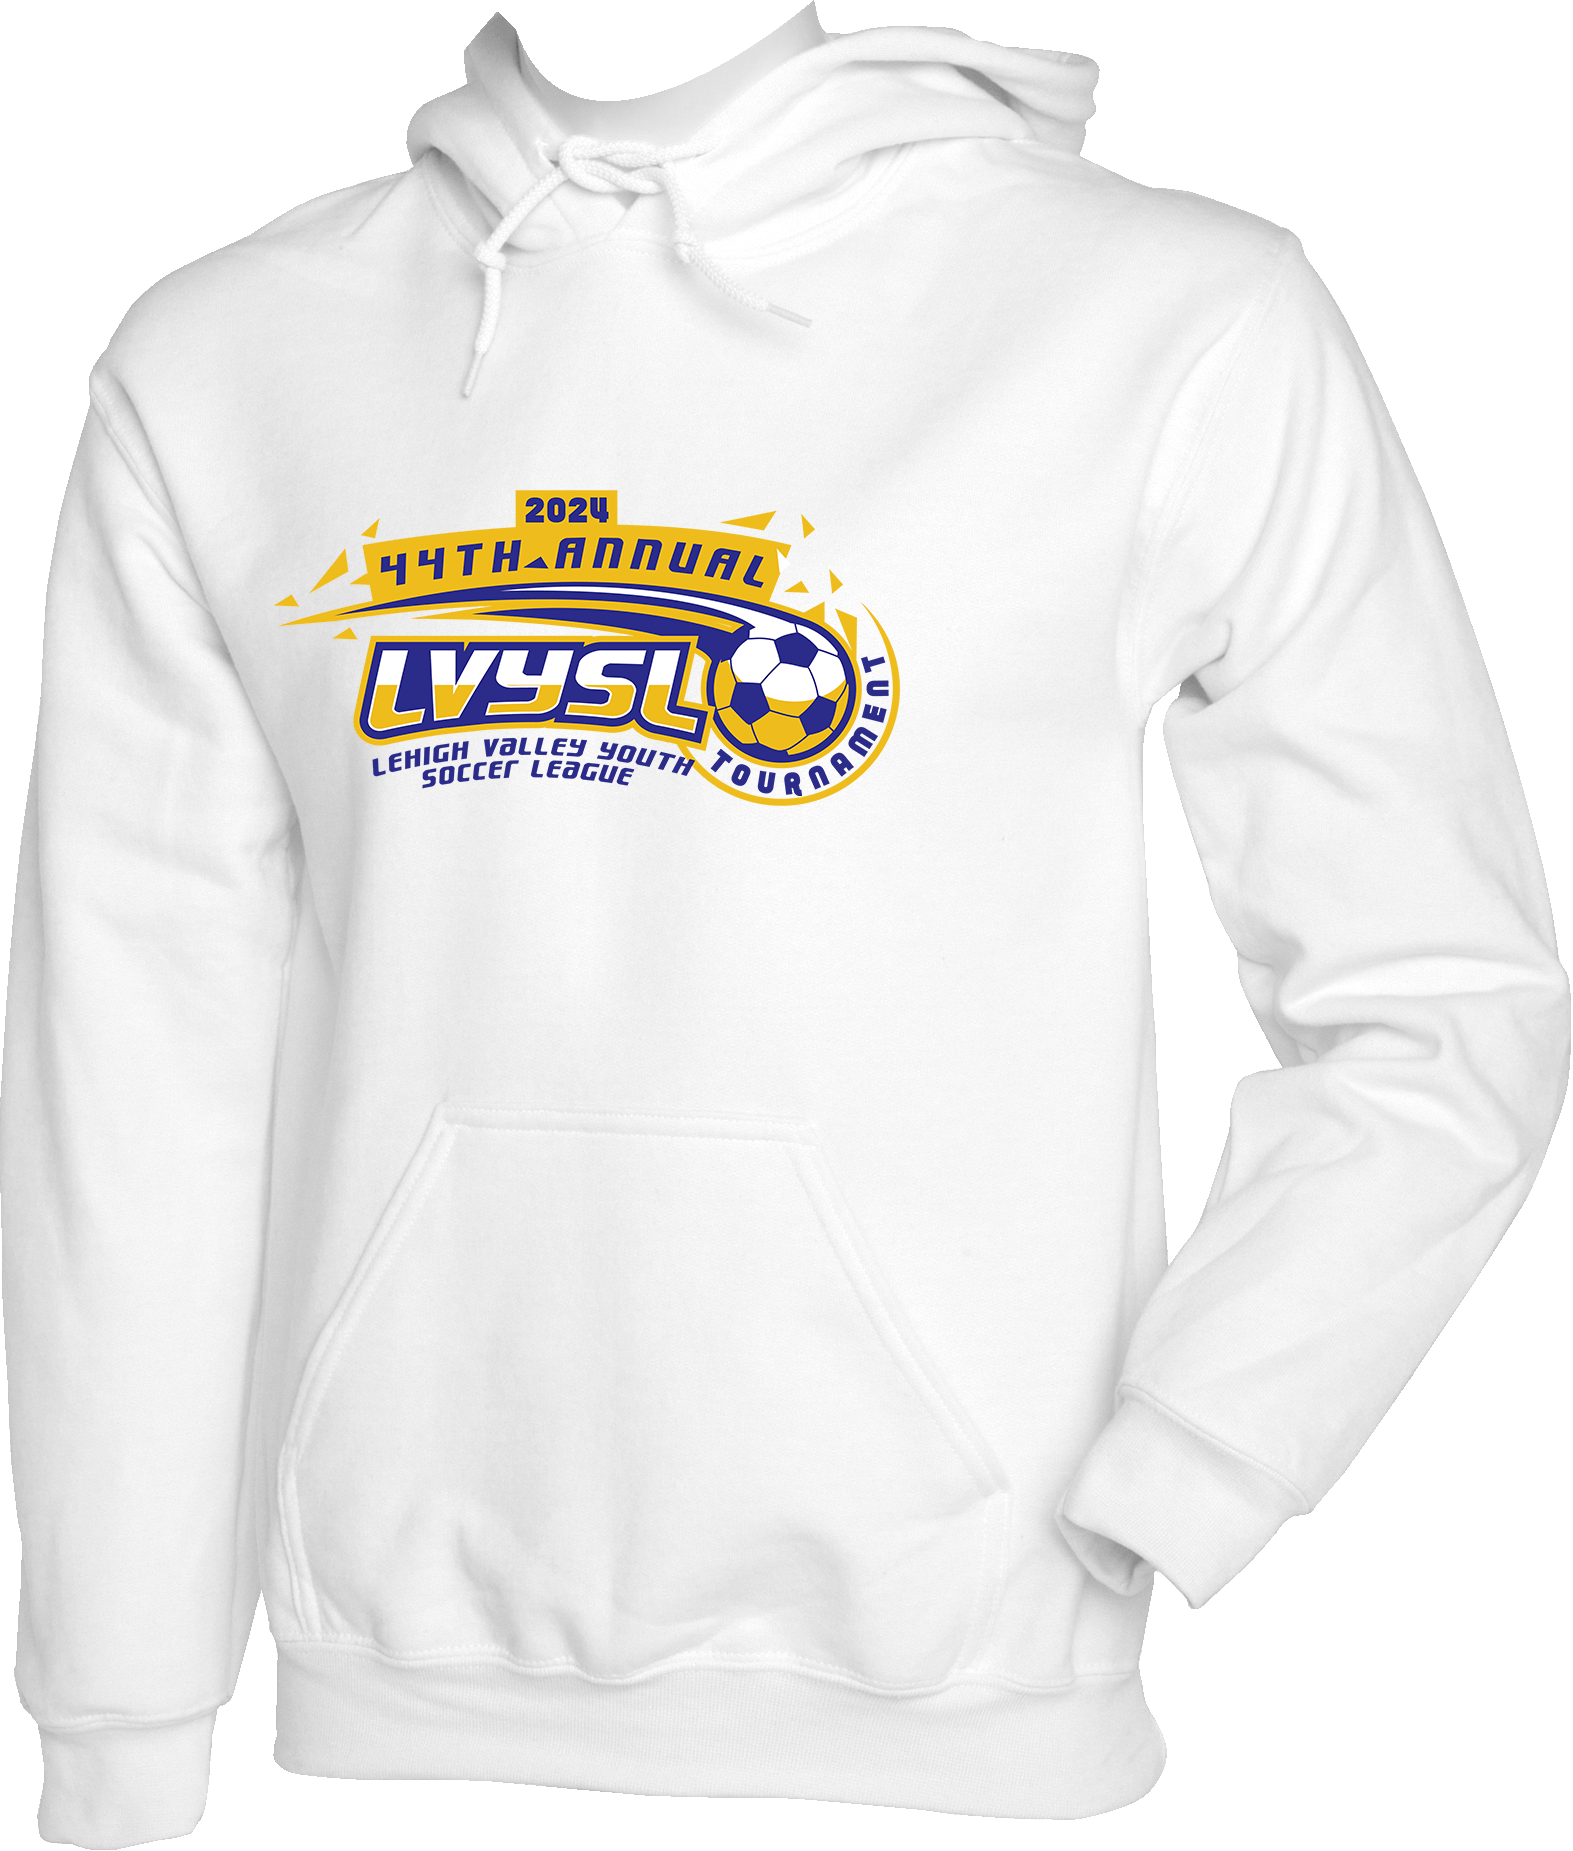 Hoodies - 2024 44th annual Lehigh Valley Youth Soccer League Tournament